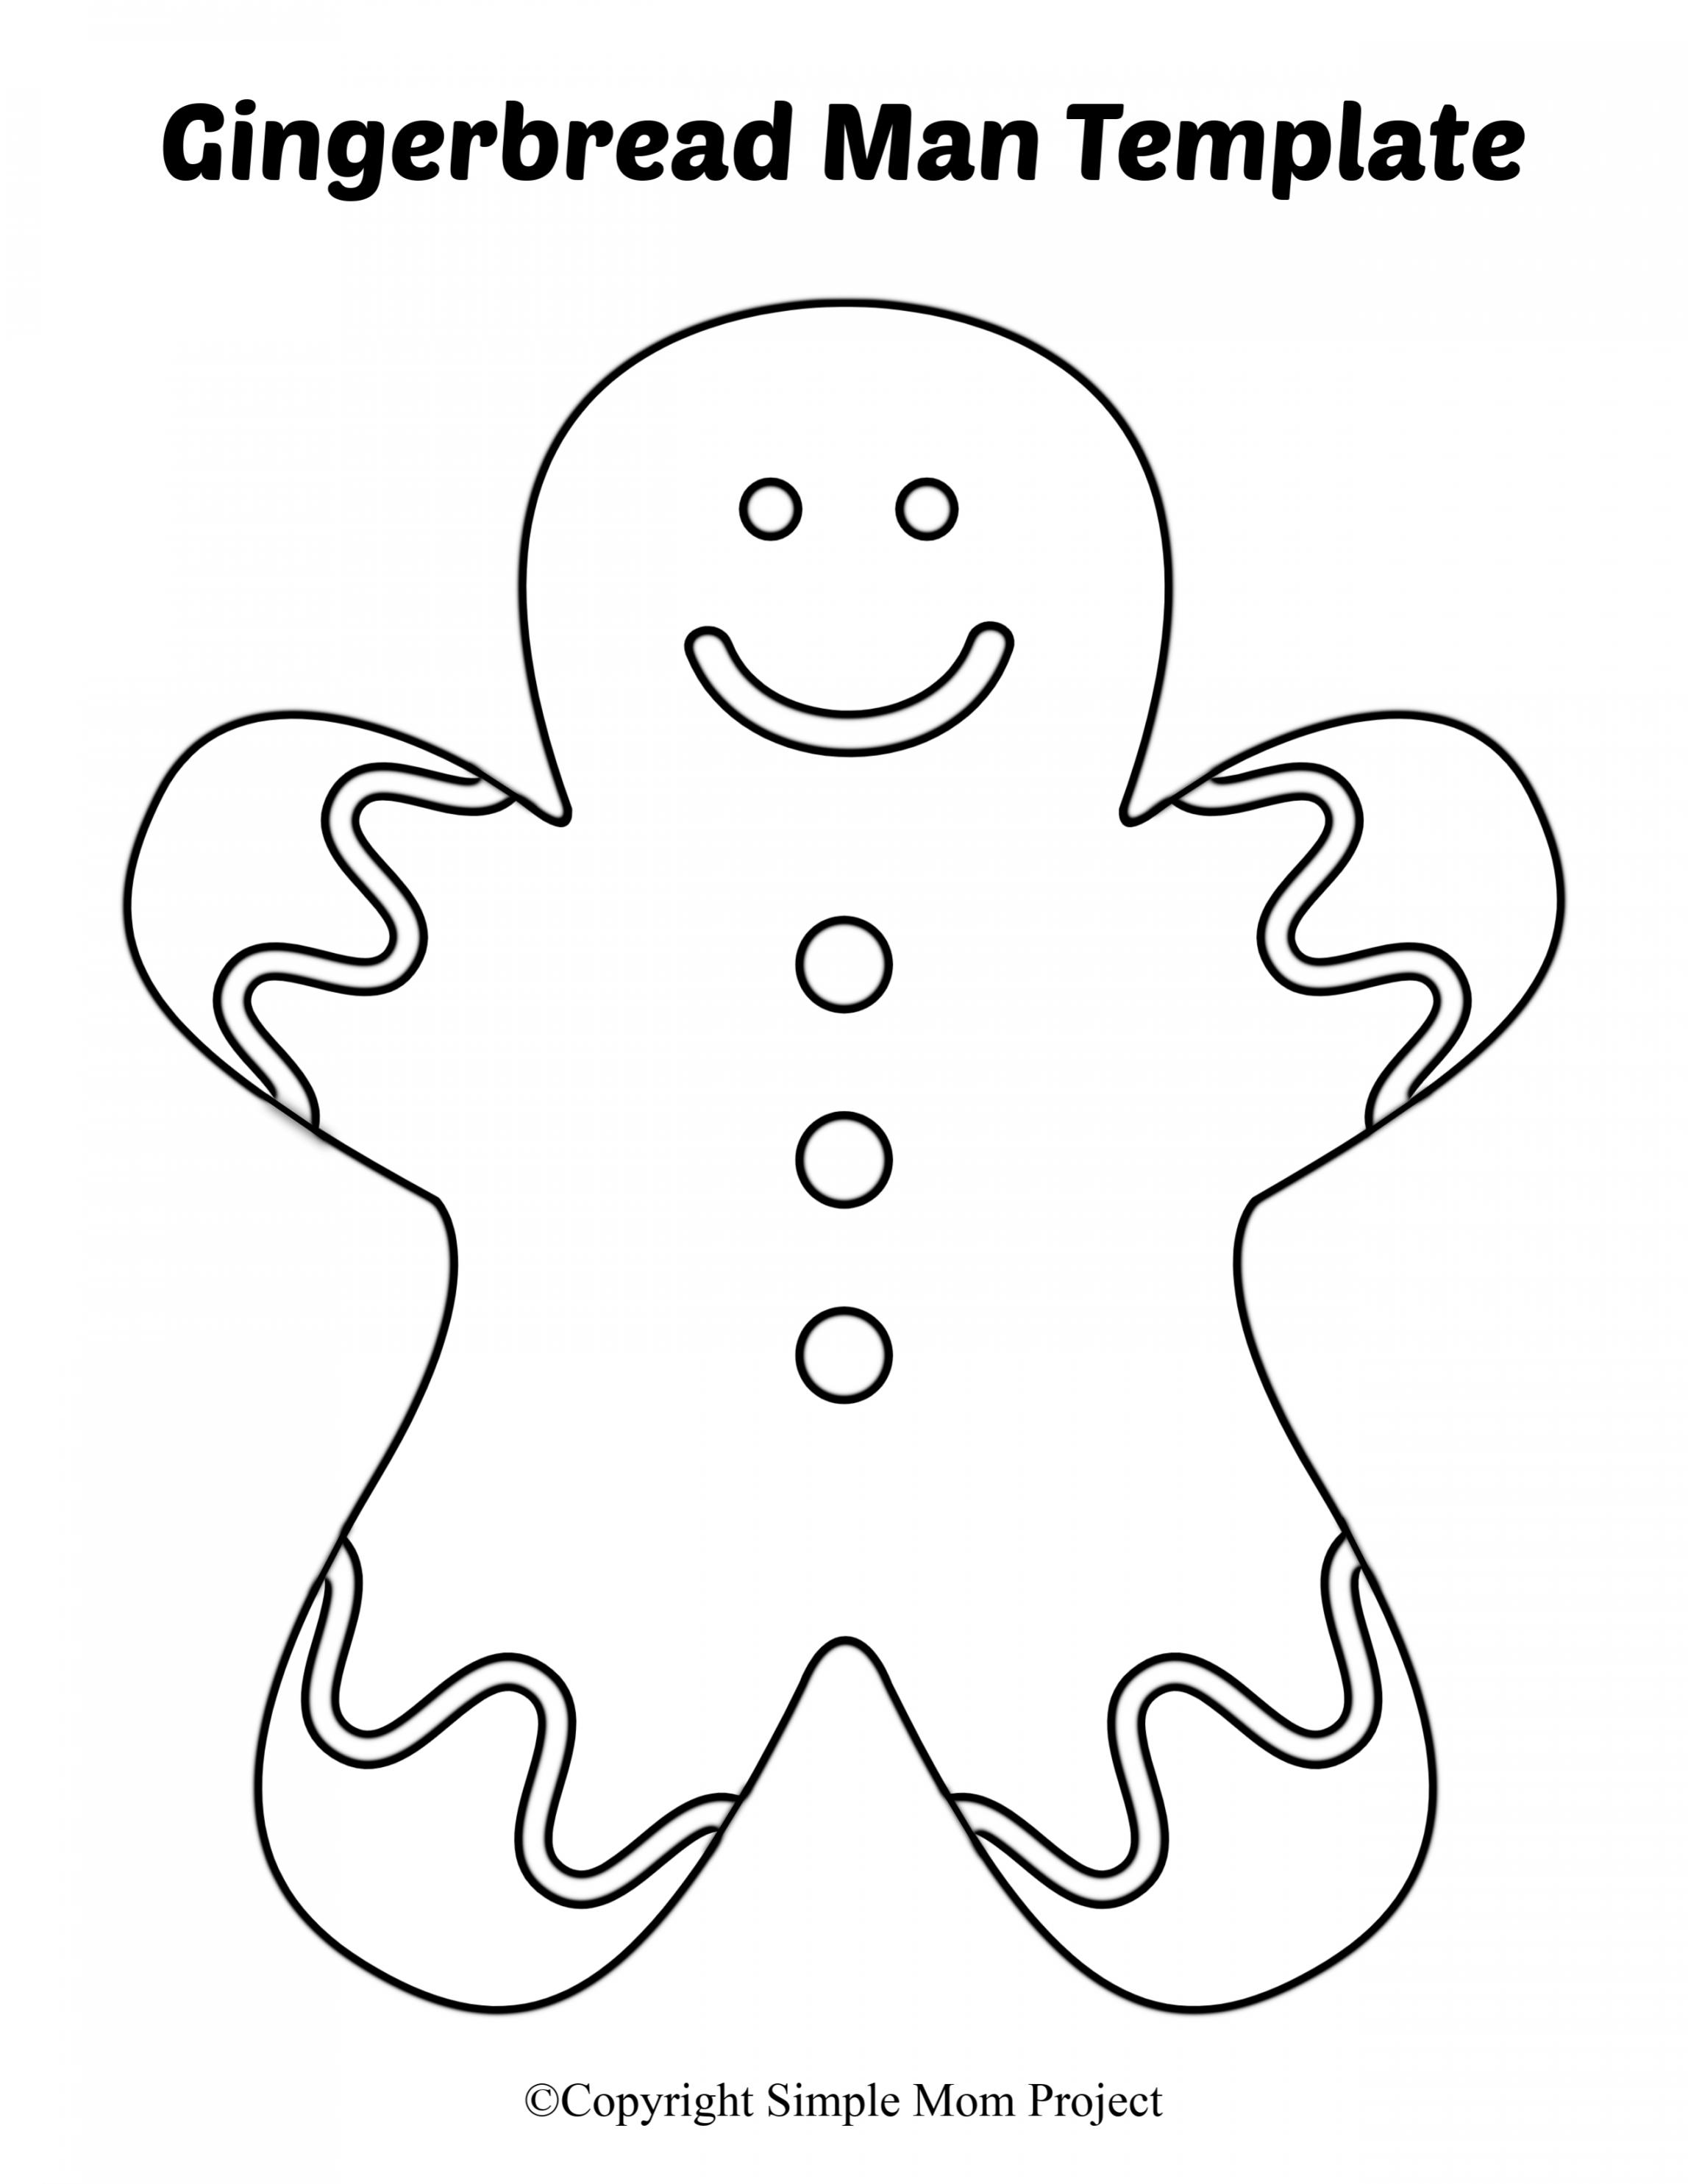 Free Printable Small Snowflake Templates  Gingerbread man  - FREE Printables - Gingerbread Outline Printable